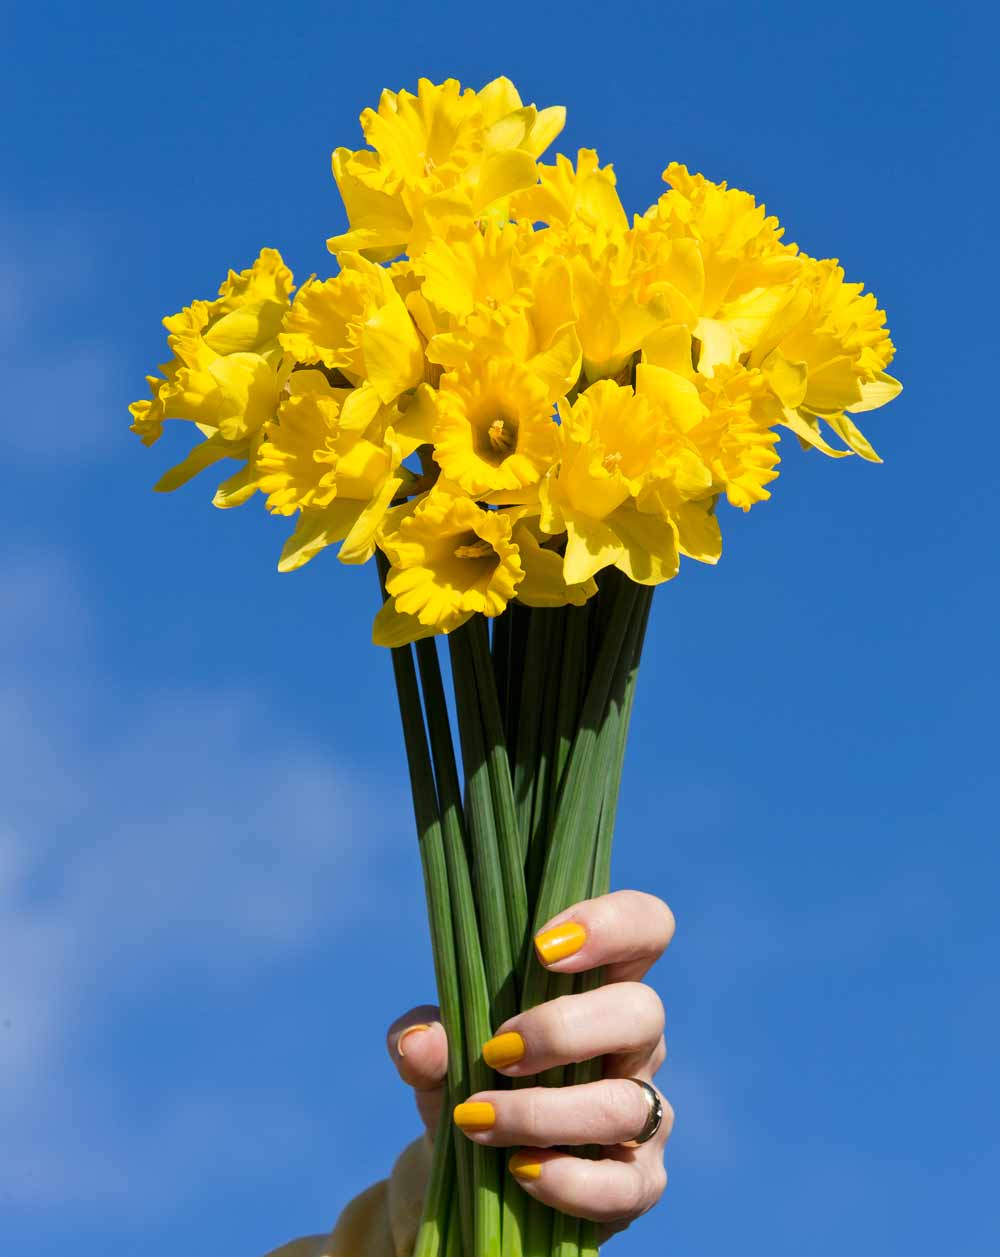 Cancer Society Nelson Daffodil Day